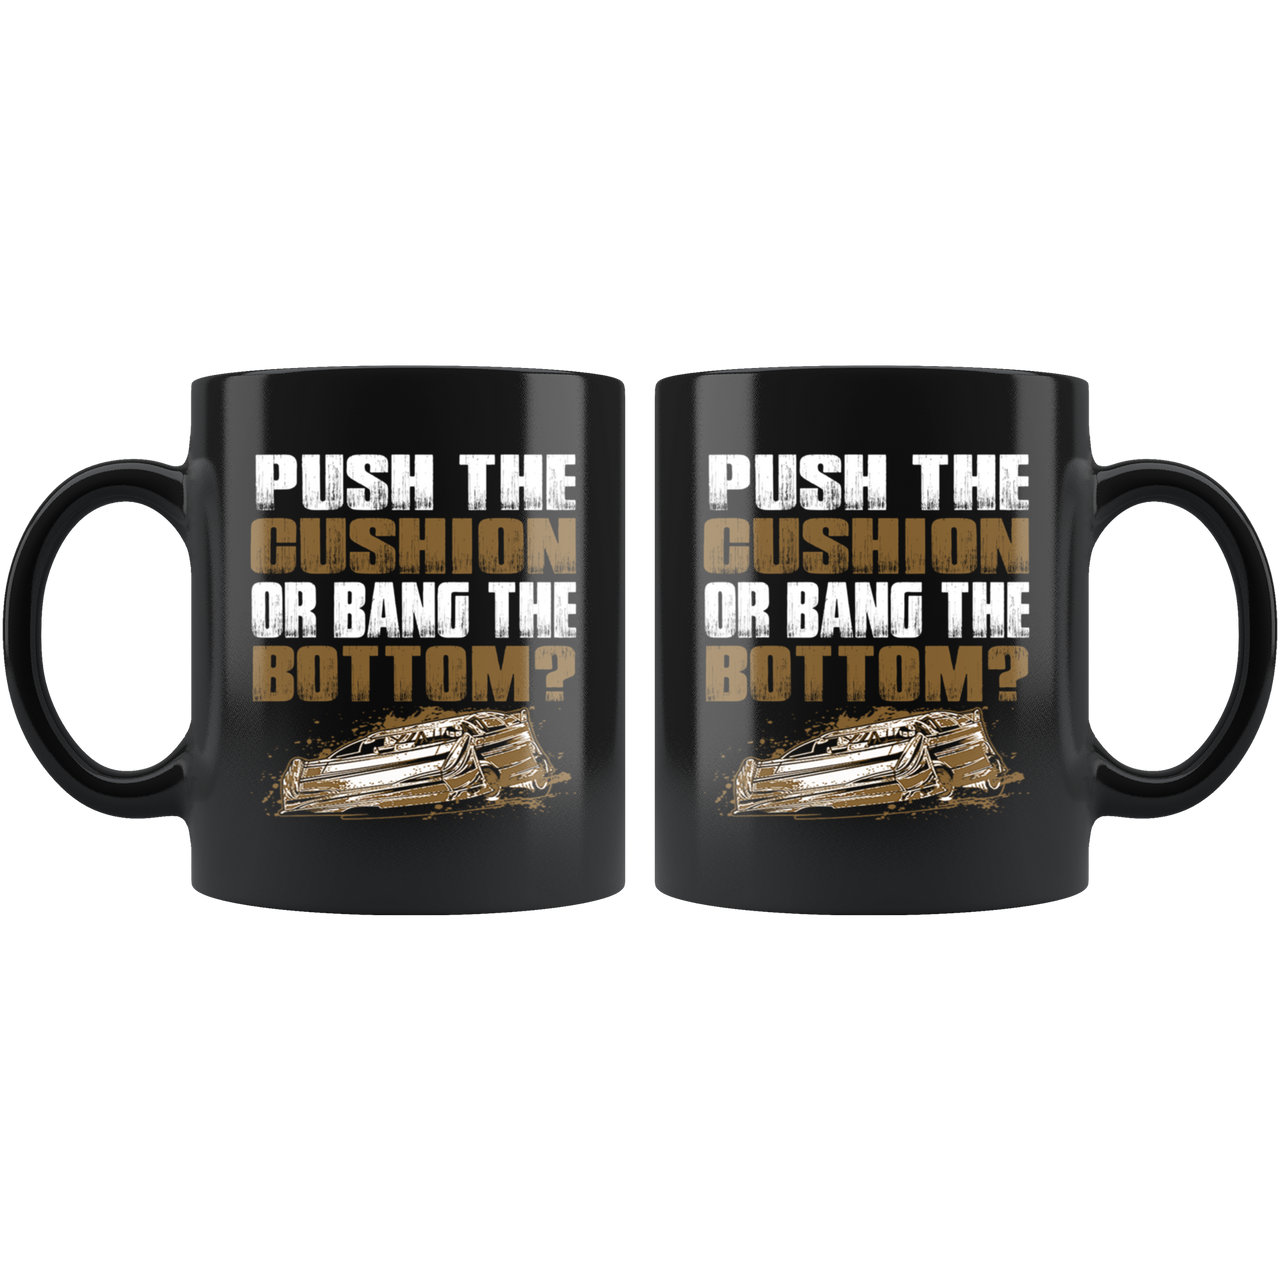 Push The Cushion Or Bang The Bottom Mug!